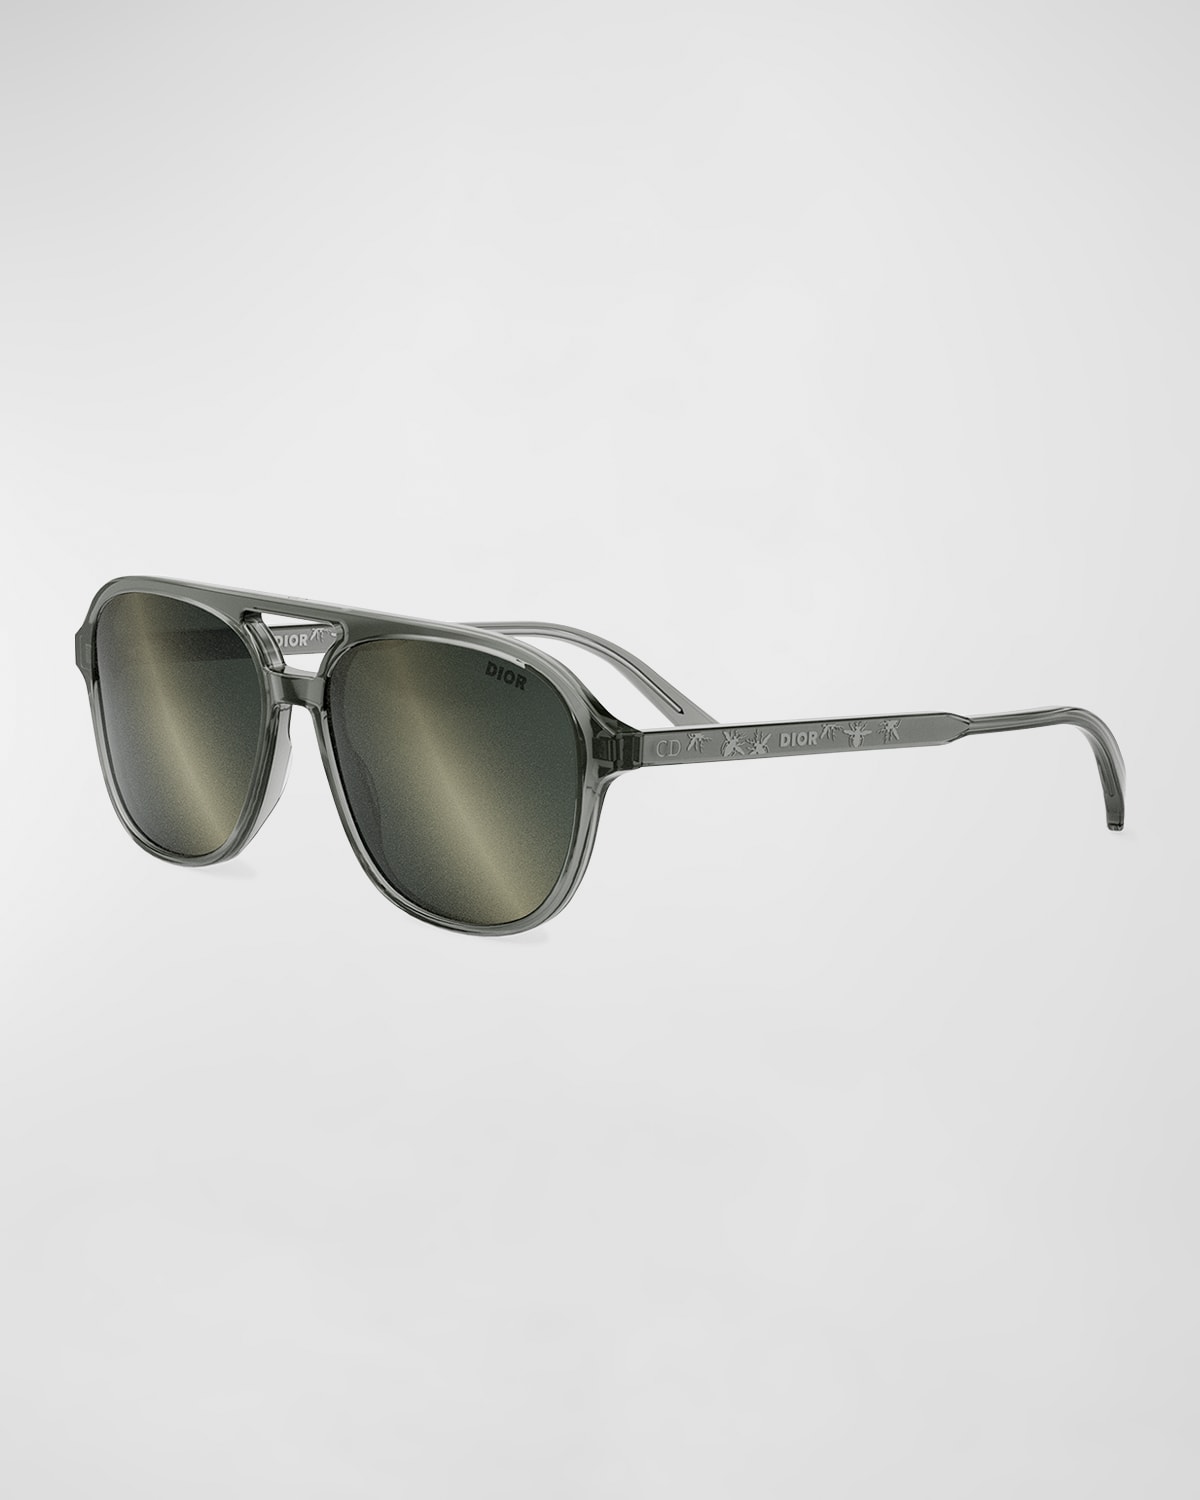 Dior In N1i Sunglasses In Grey Smoke Mirror